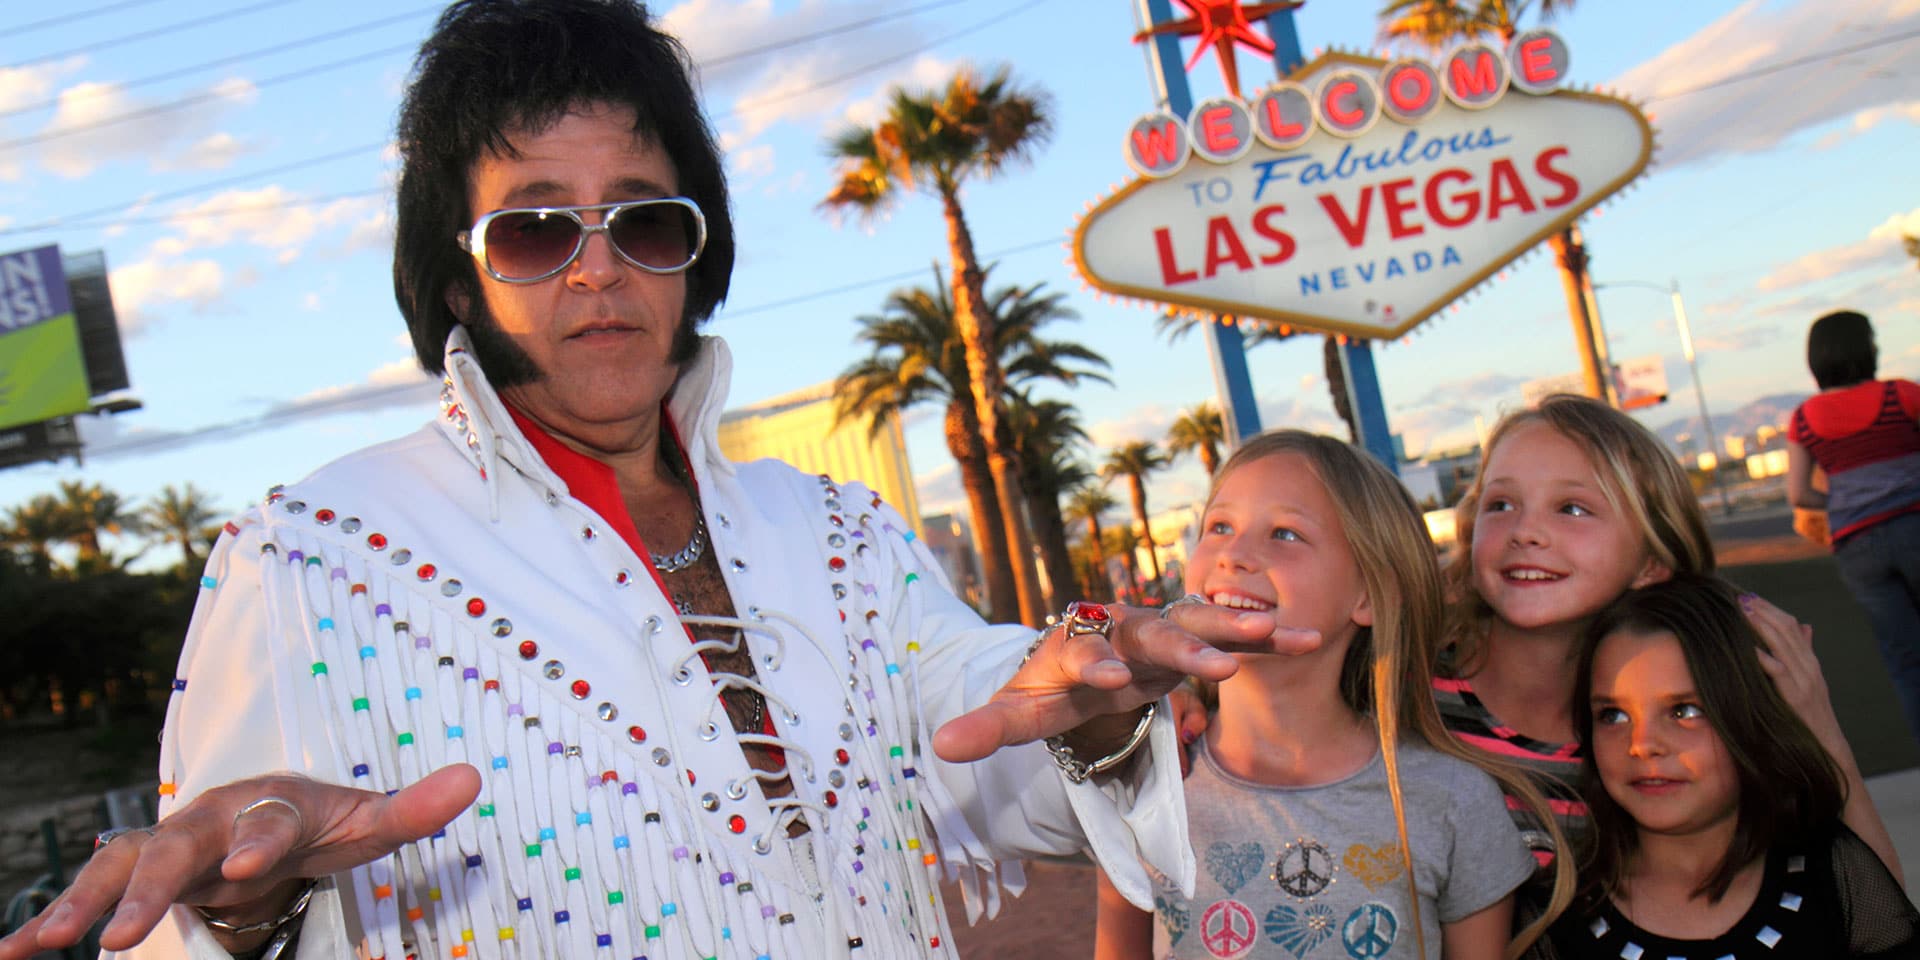 Phobia Manhattan Artifact Las Vegas Activities For Kids | Marriott Bonvoy Traveler